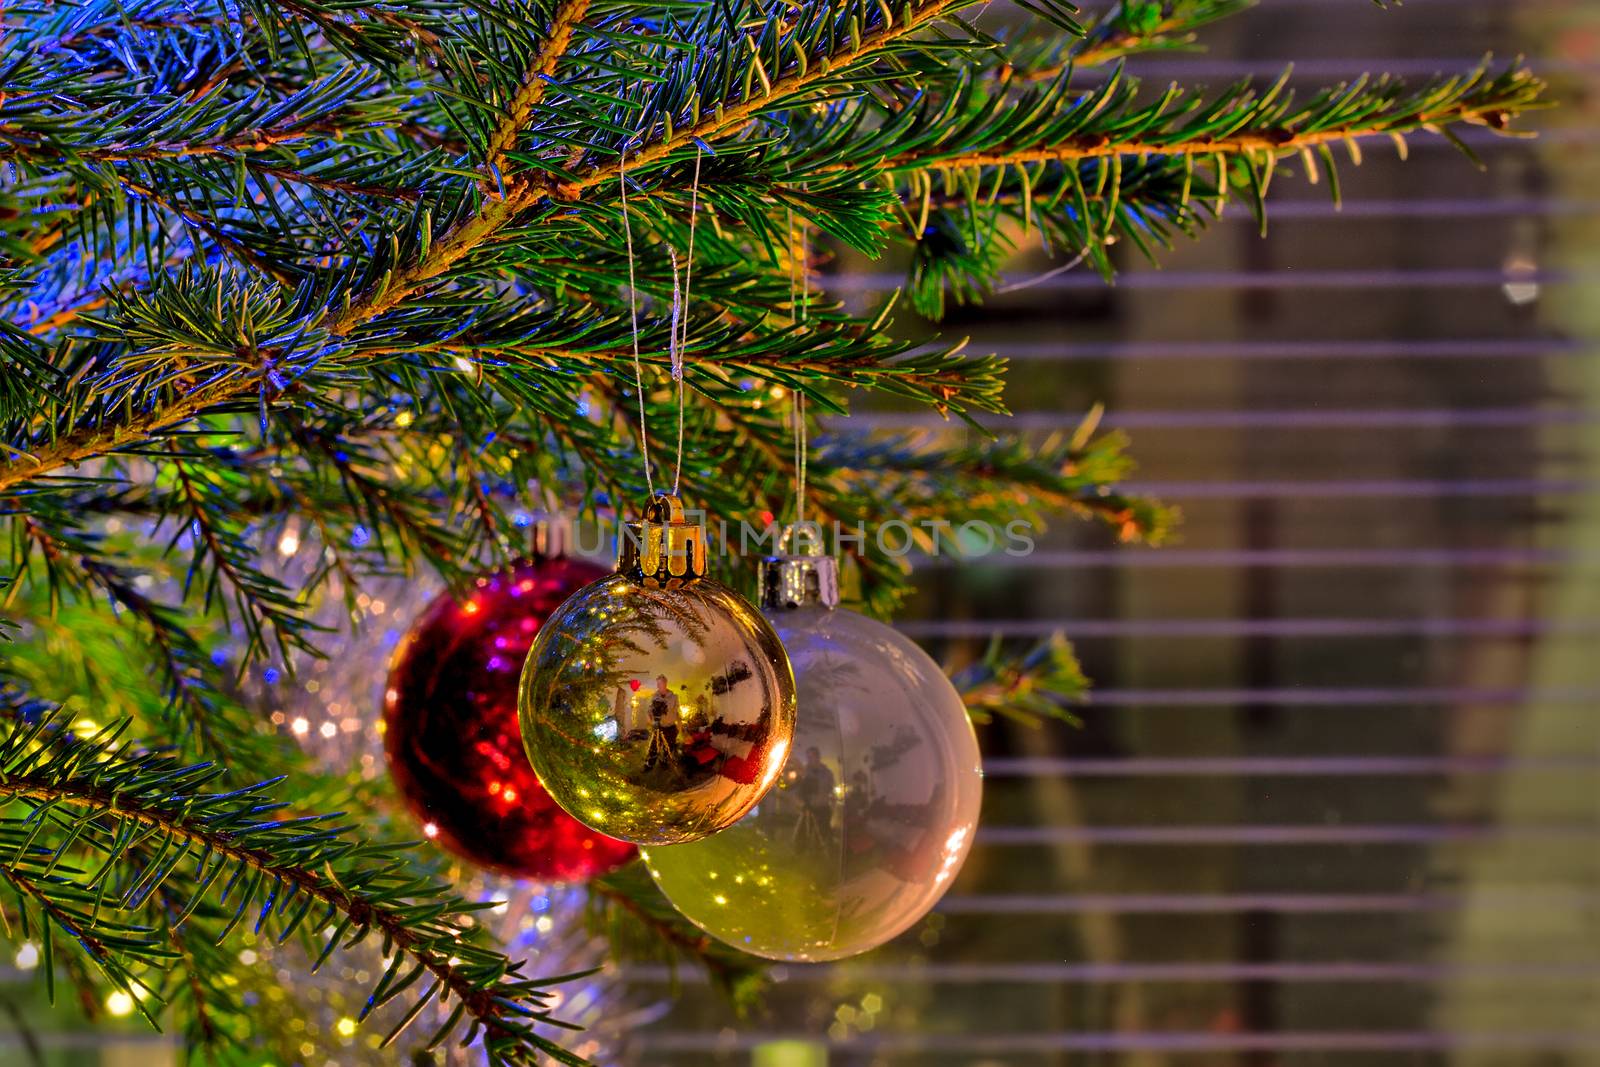 Sparkling ornaments on a christmas tree on Christmas eve.